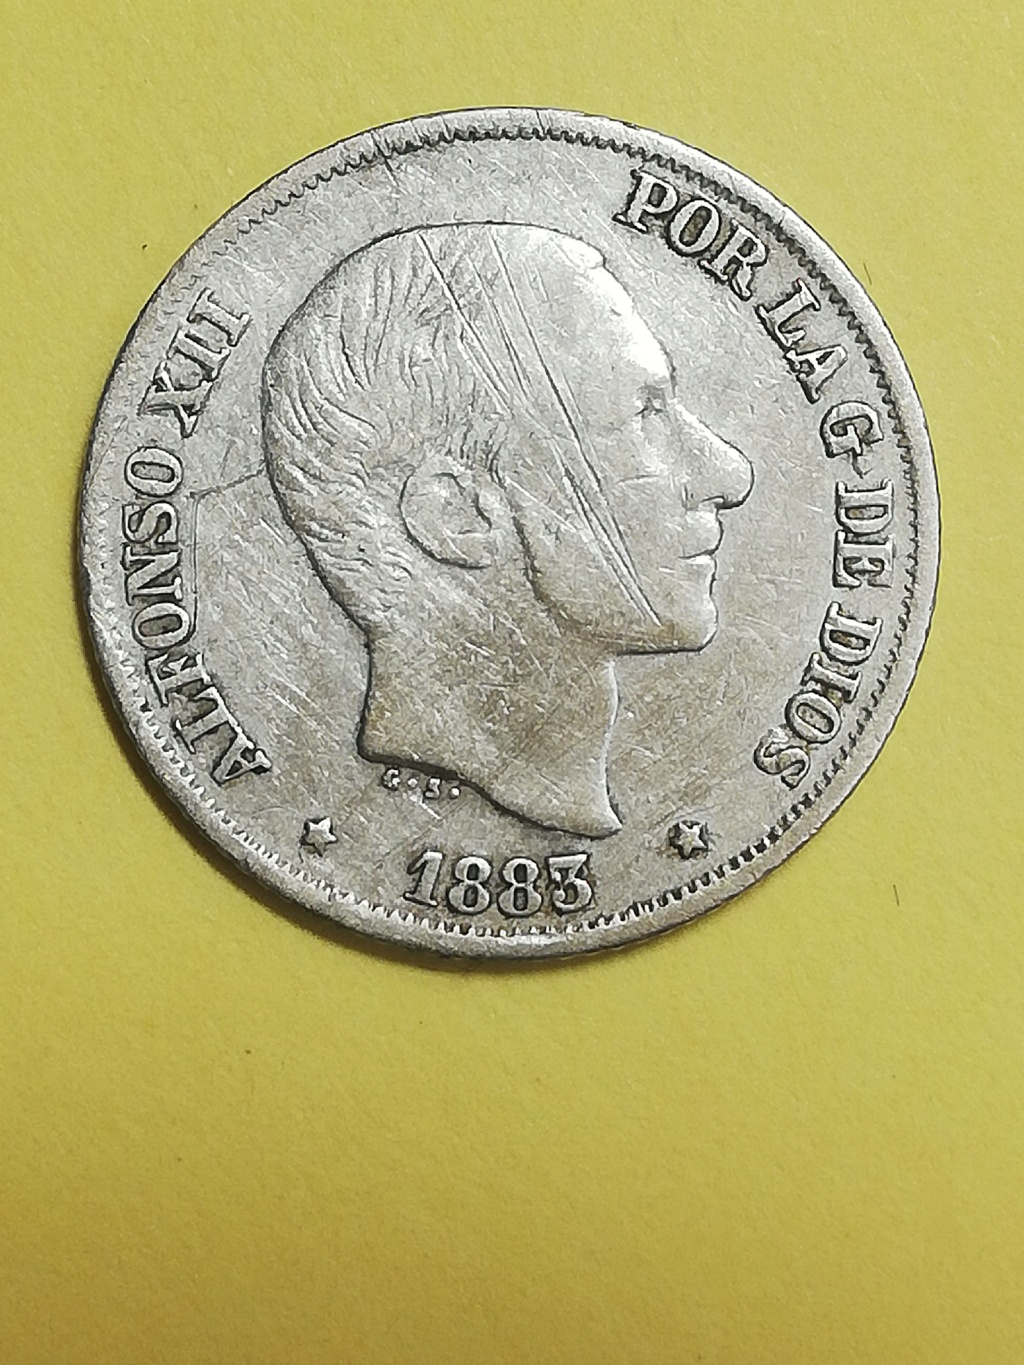 10ctmos.de peso,1883 sobre 2 Img_2500